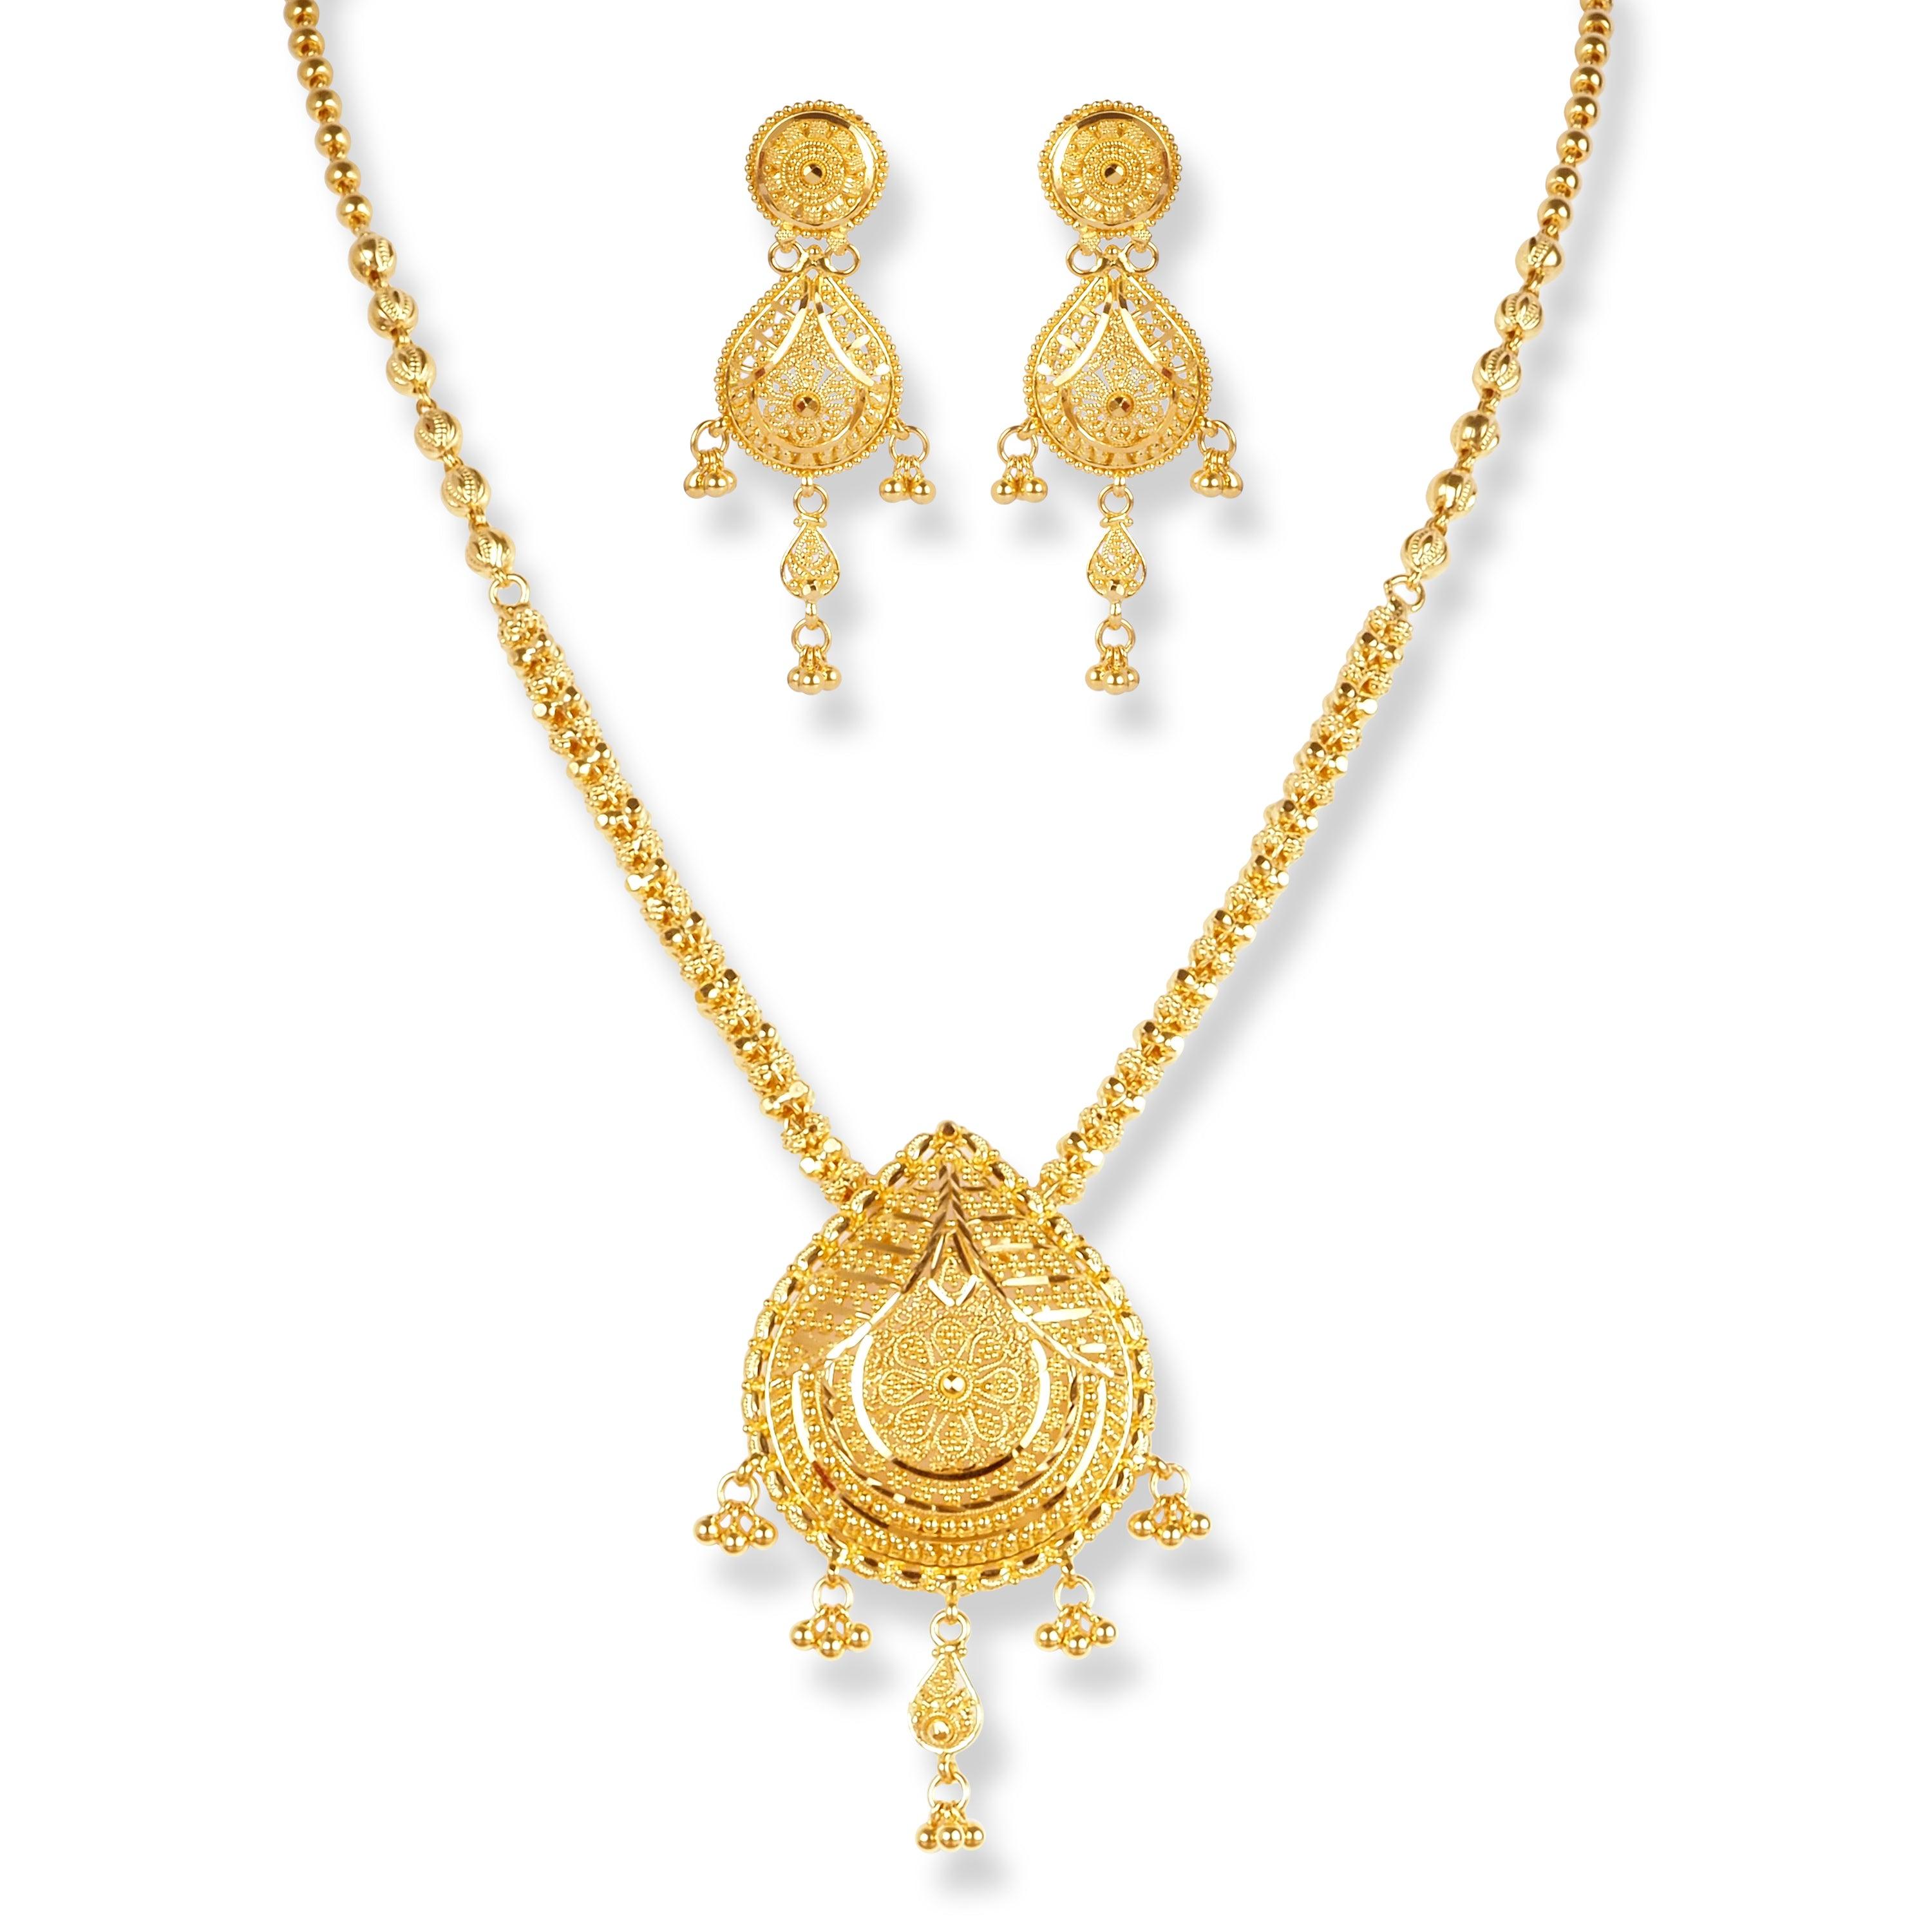 22ct Gold Set with Filigree Work N-7908 - Minar Jewellers